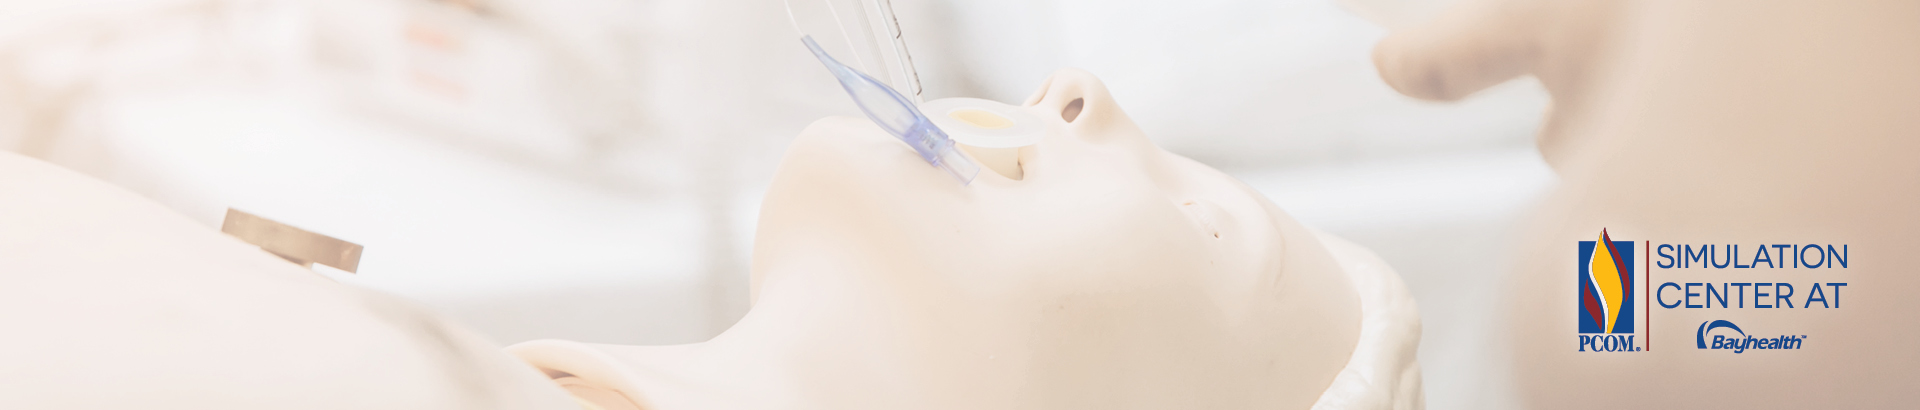 Mannequin intubated in simulation lab